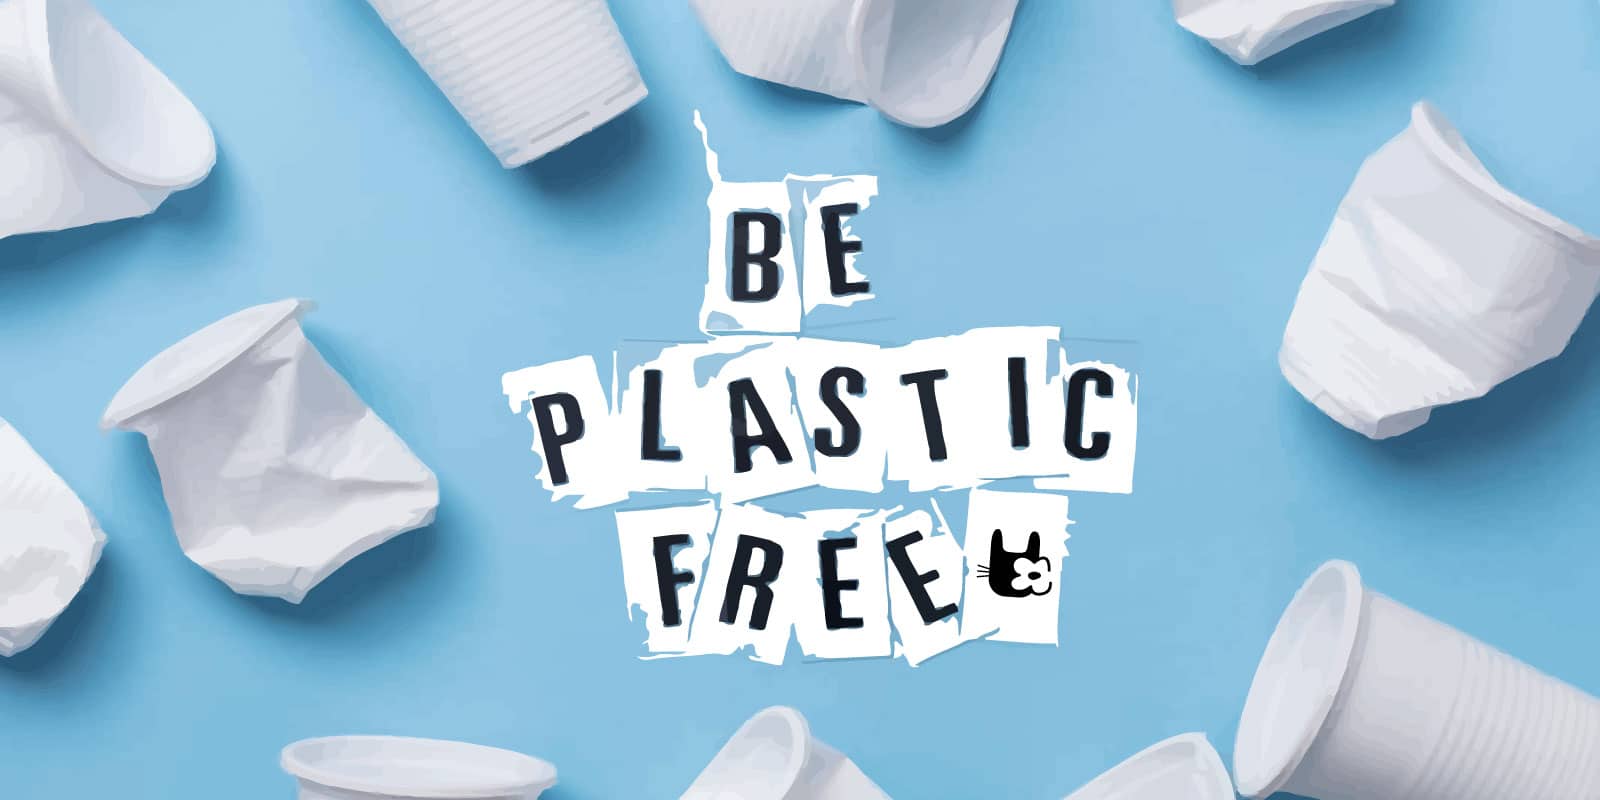 Plastic free july